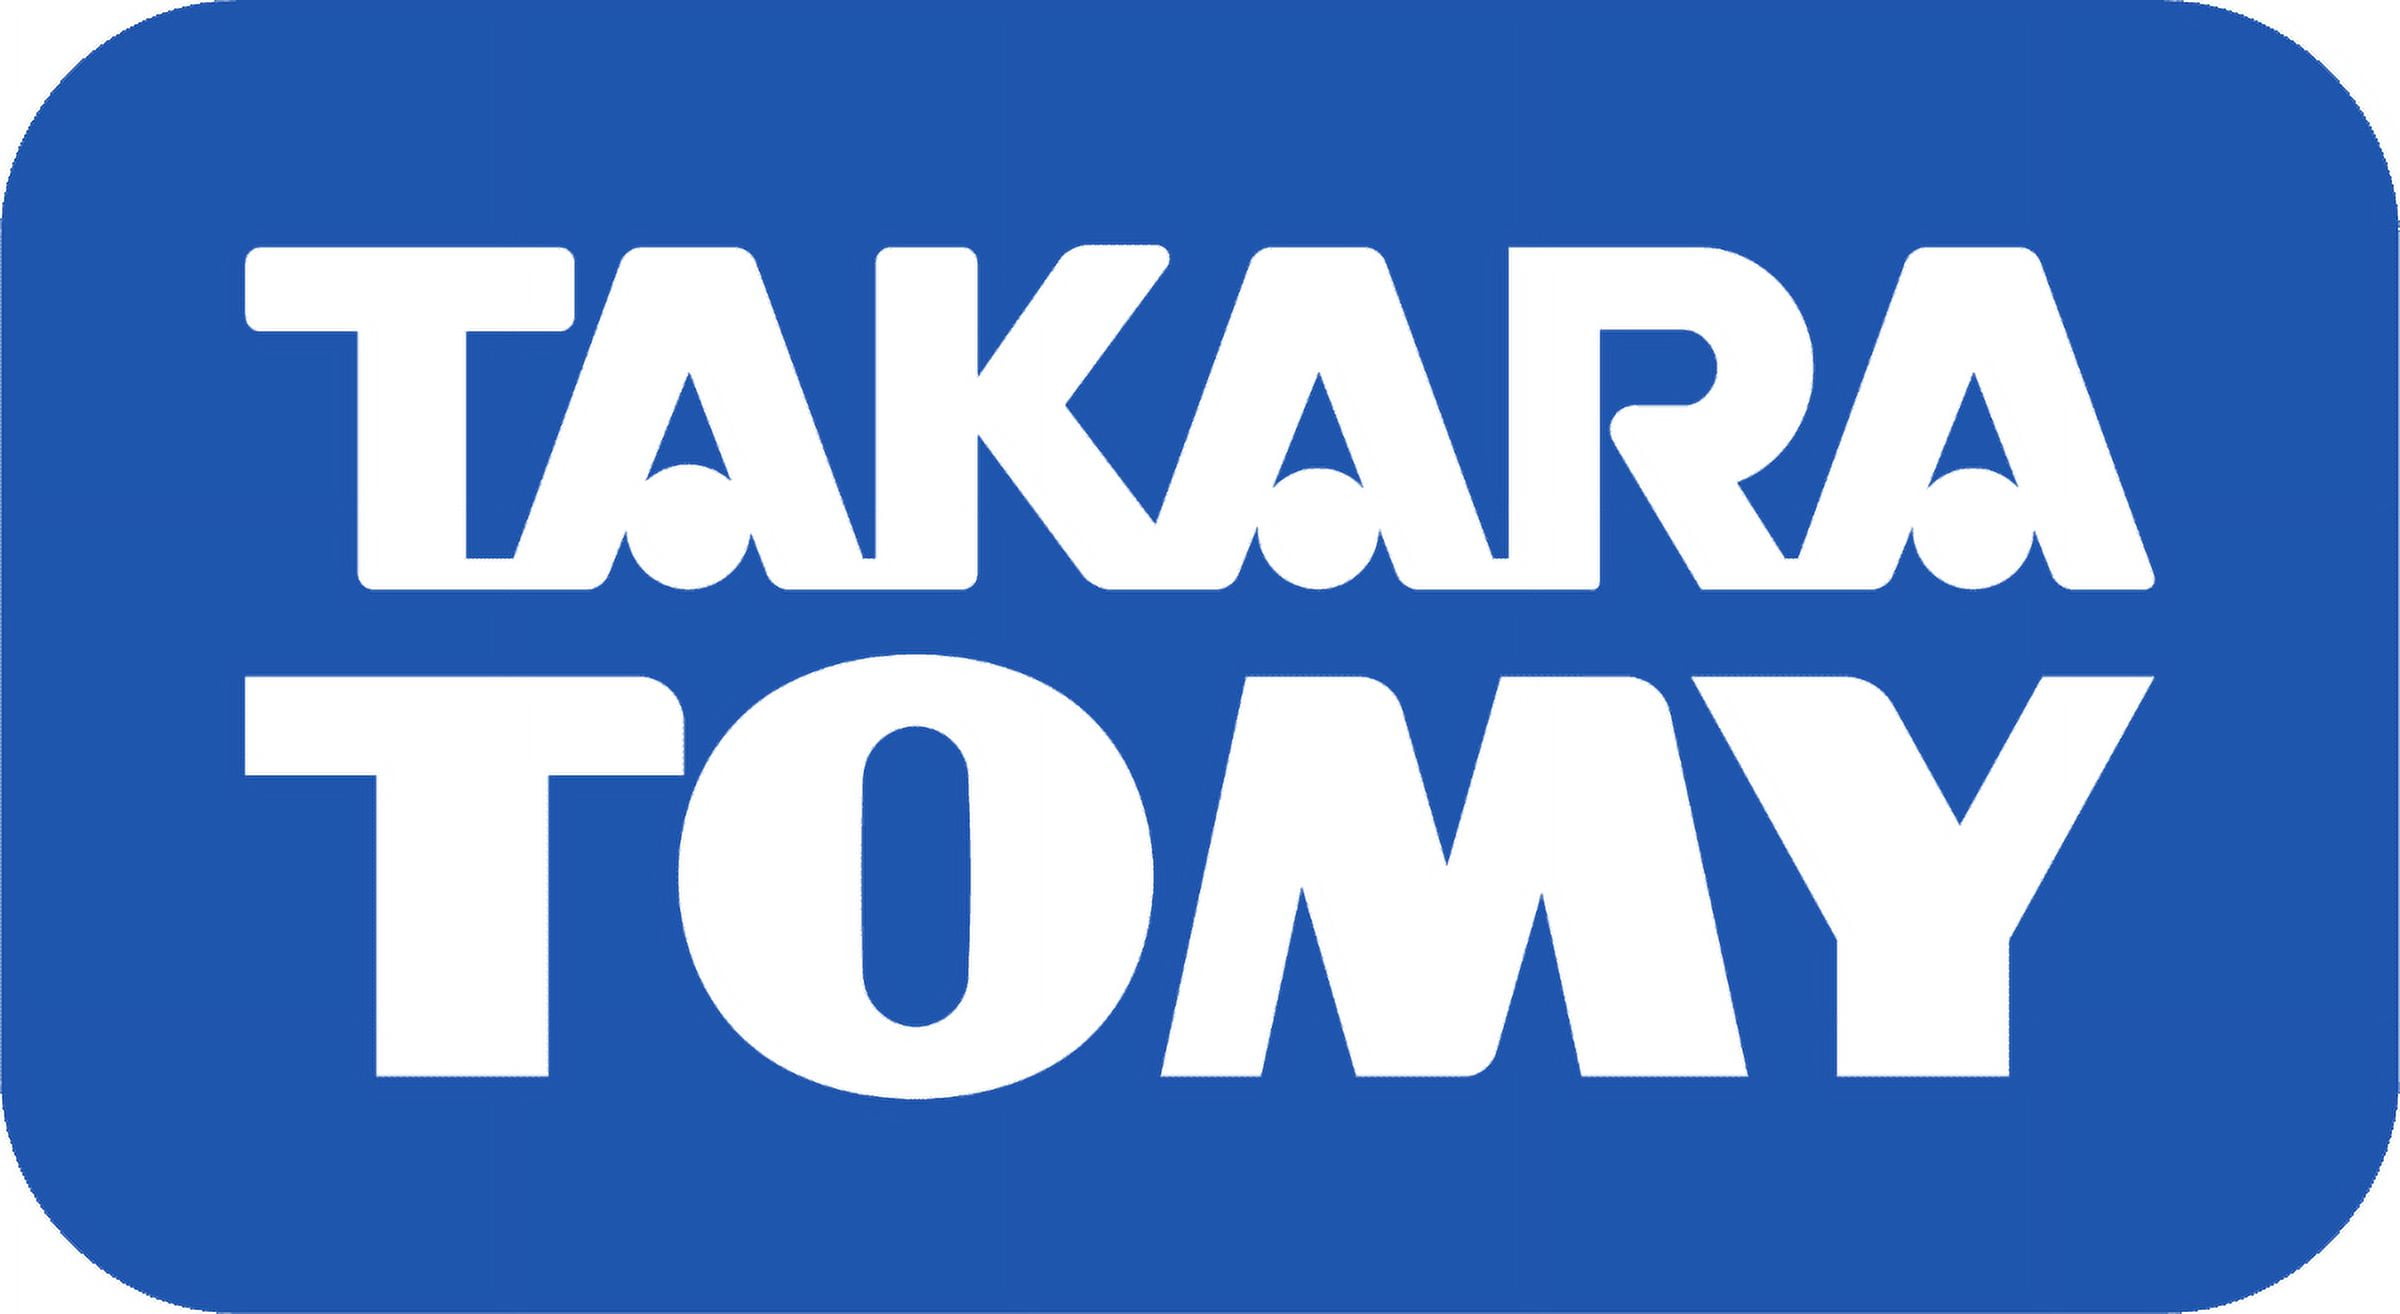 Takara Tomy Beyblade BURST B-193 Ultimate Valkyrie Legacy. – Mall Of Toys